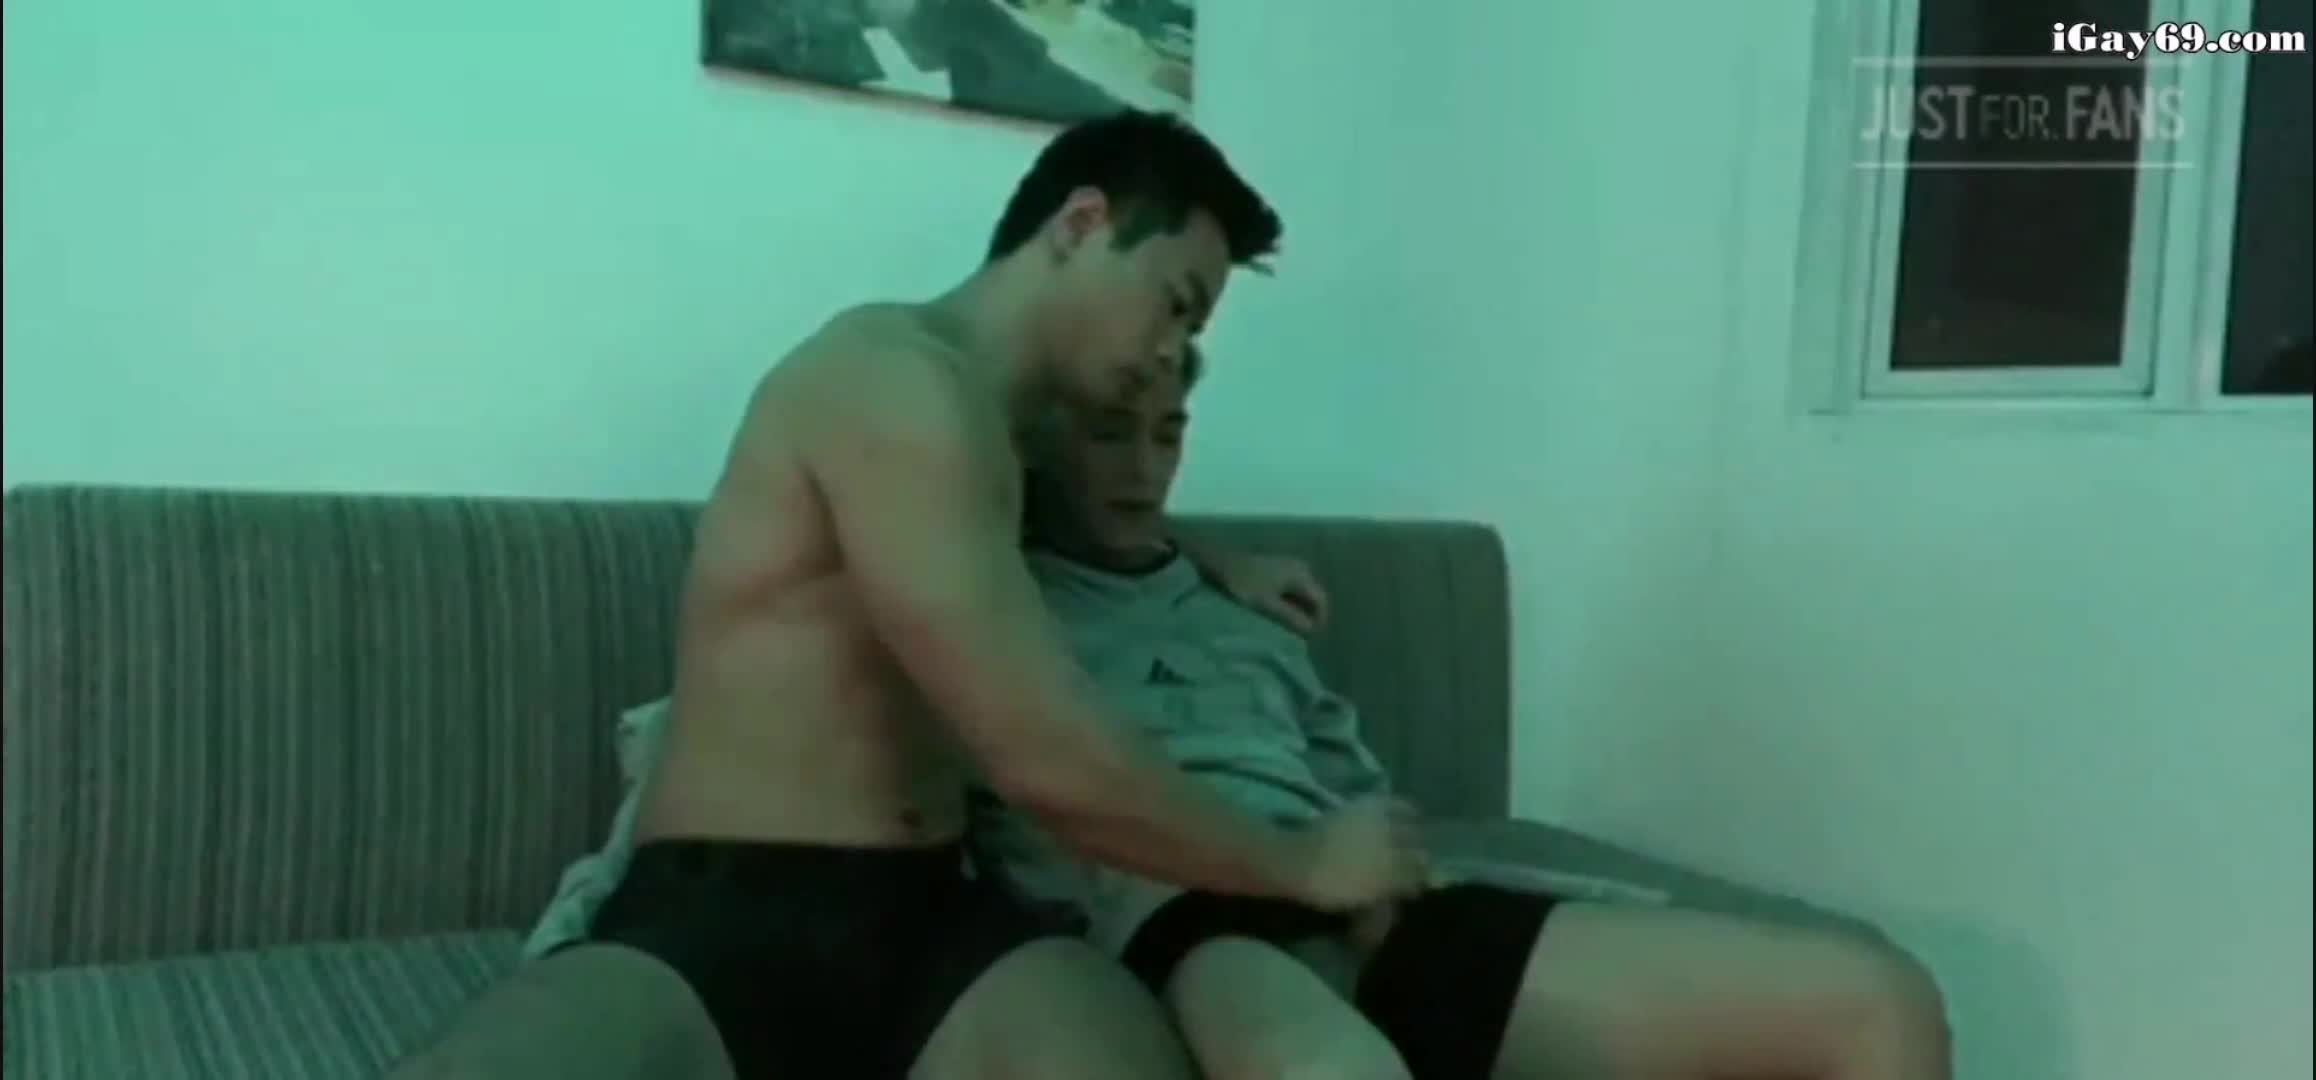 Pinoy gay sex videos